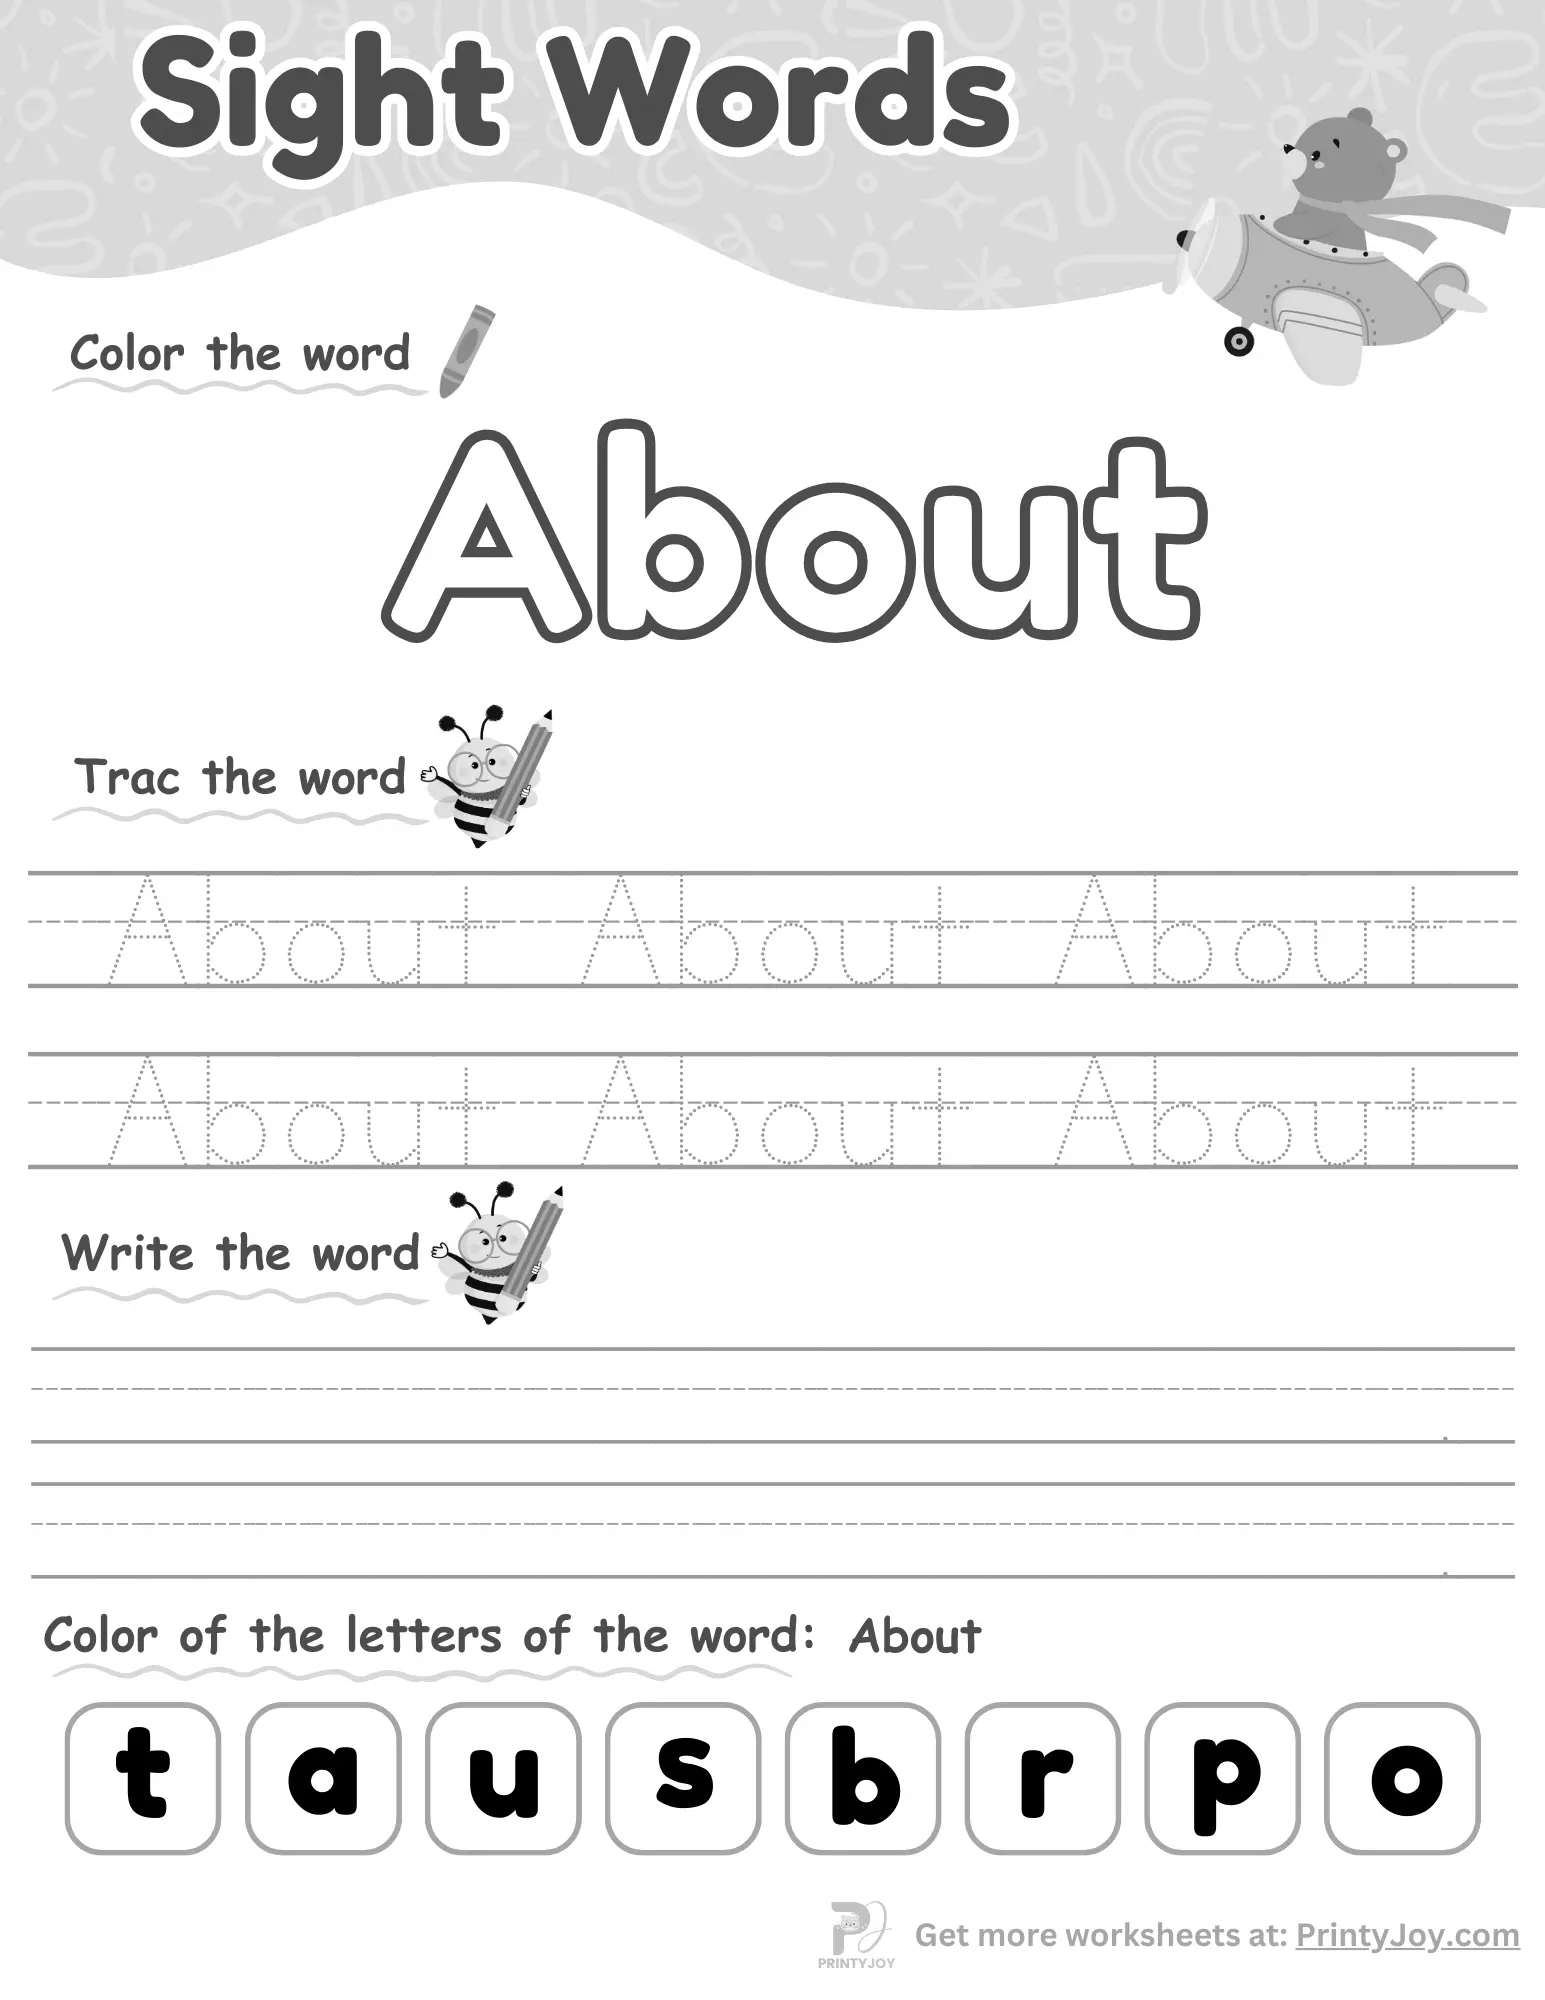 Sight Word Tracing Worksheets Free Printable